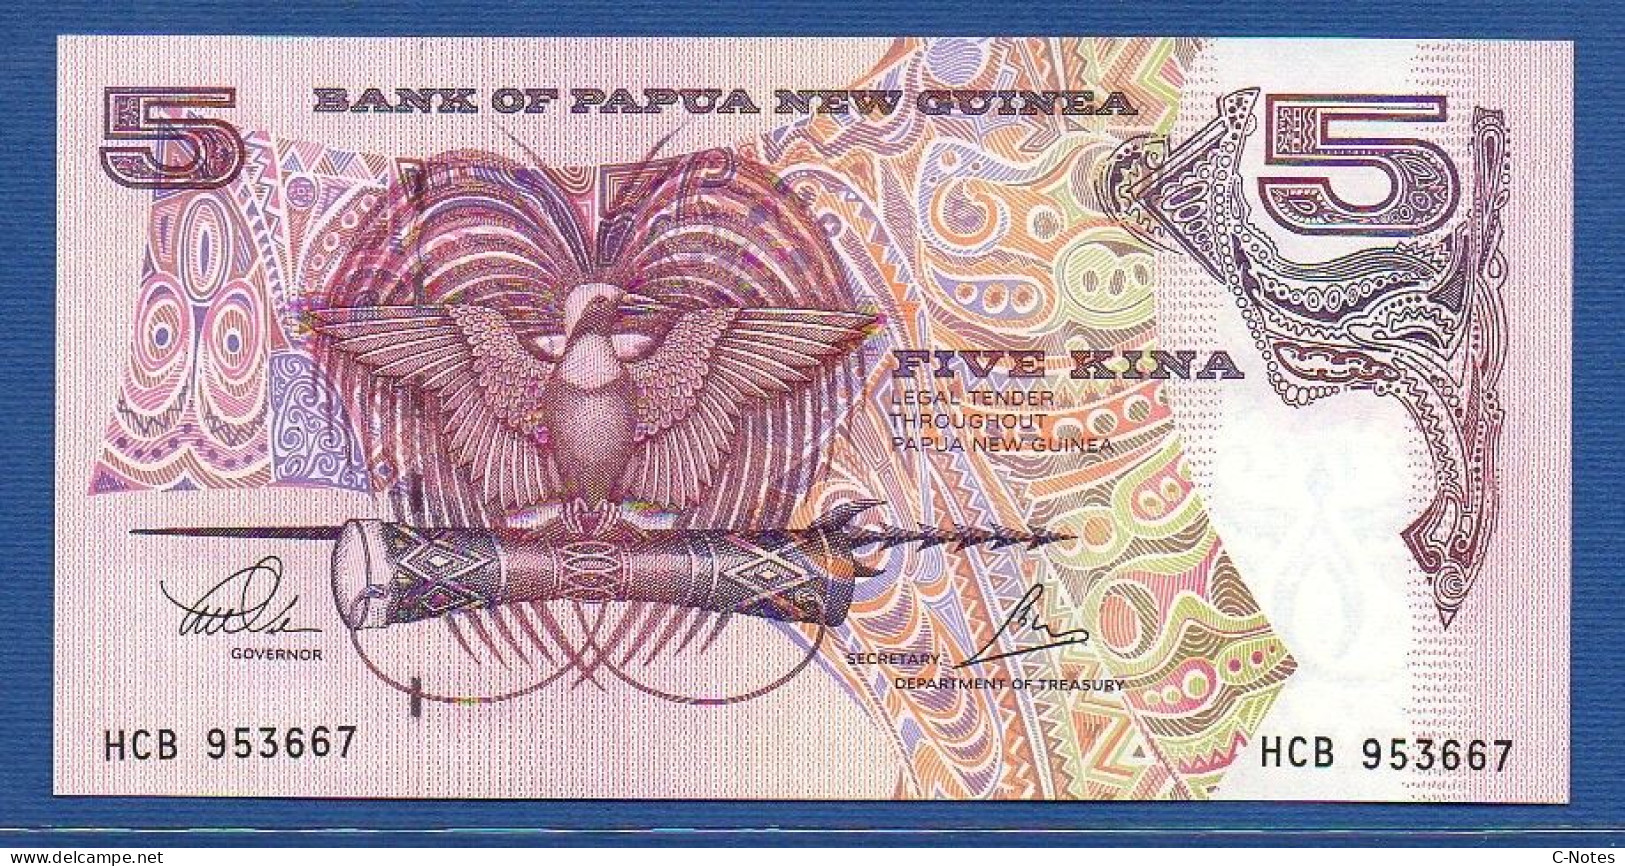 PAPUA NEW GUINEA - P.13c – 5 KINA ND (1999 - 2000) UNC, S/n HCB 953667 - Papua New Guinea